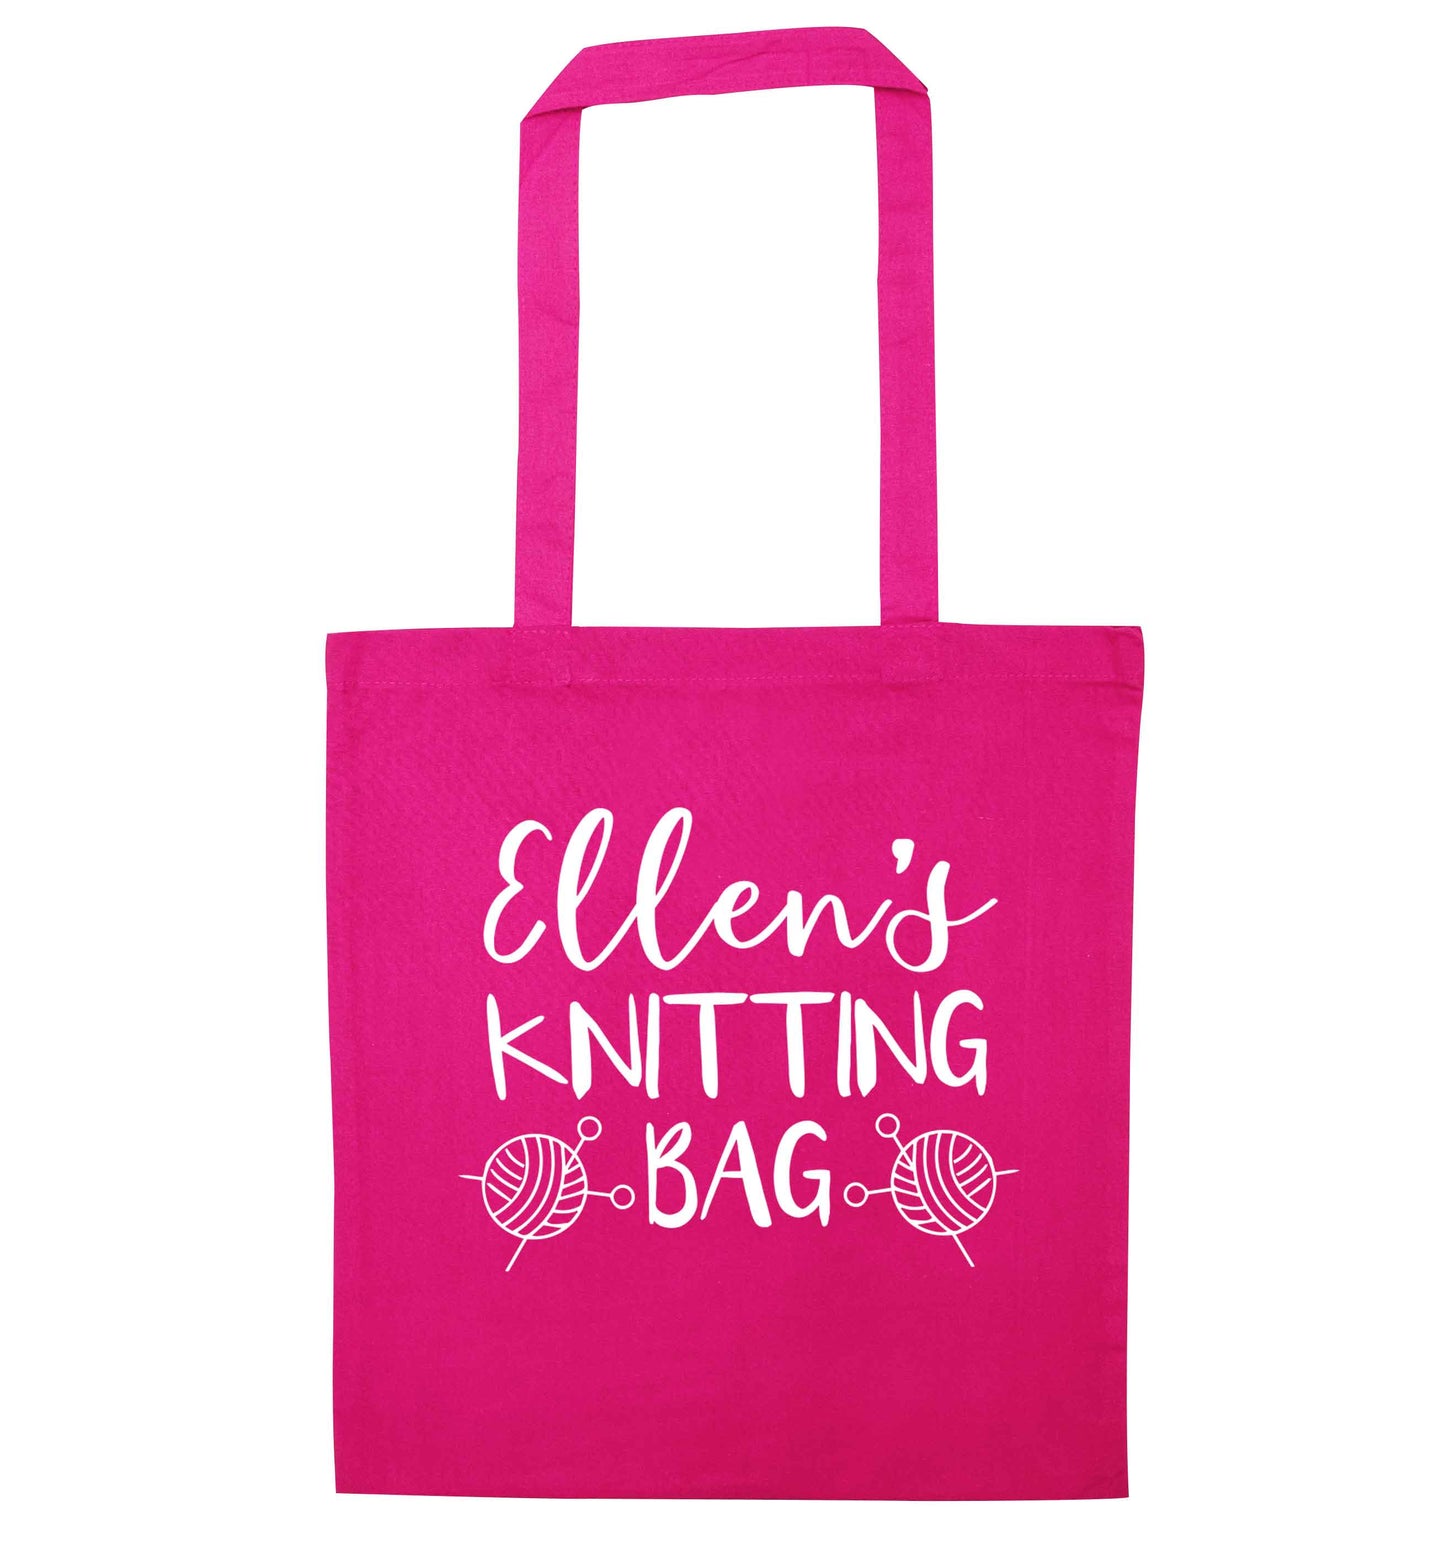 Personalised knitting bag pink tote bag